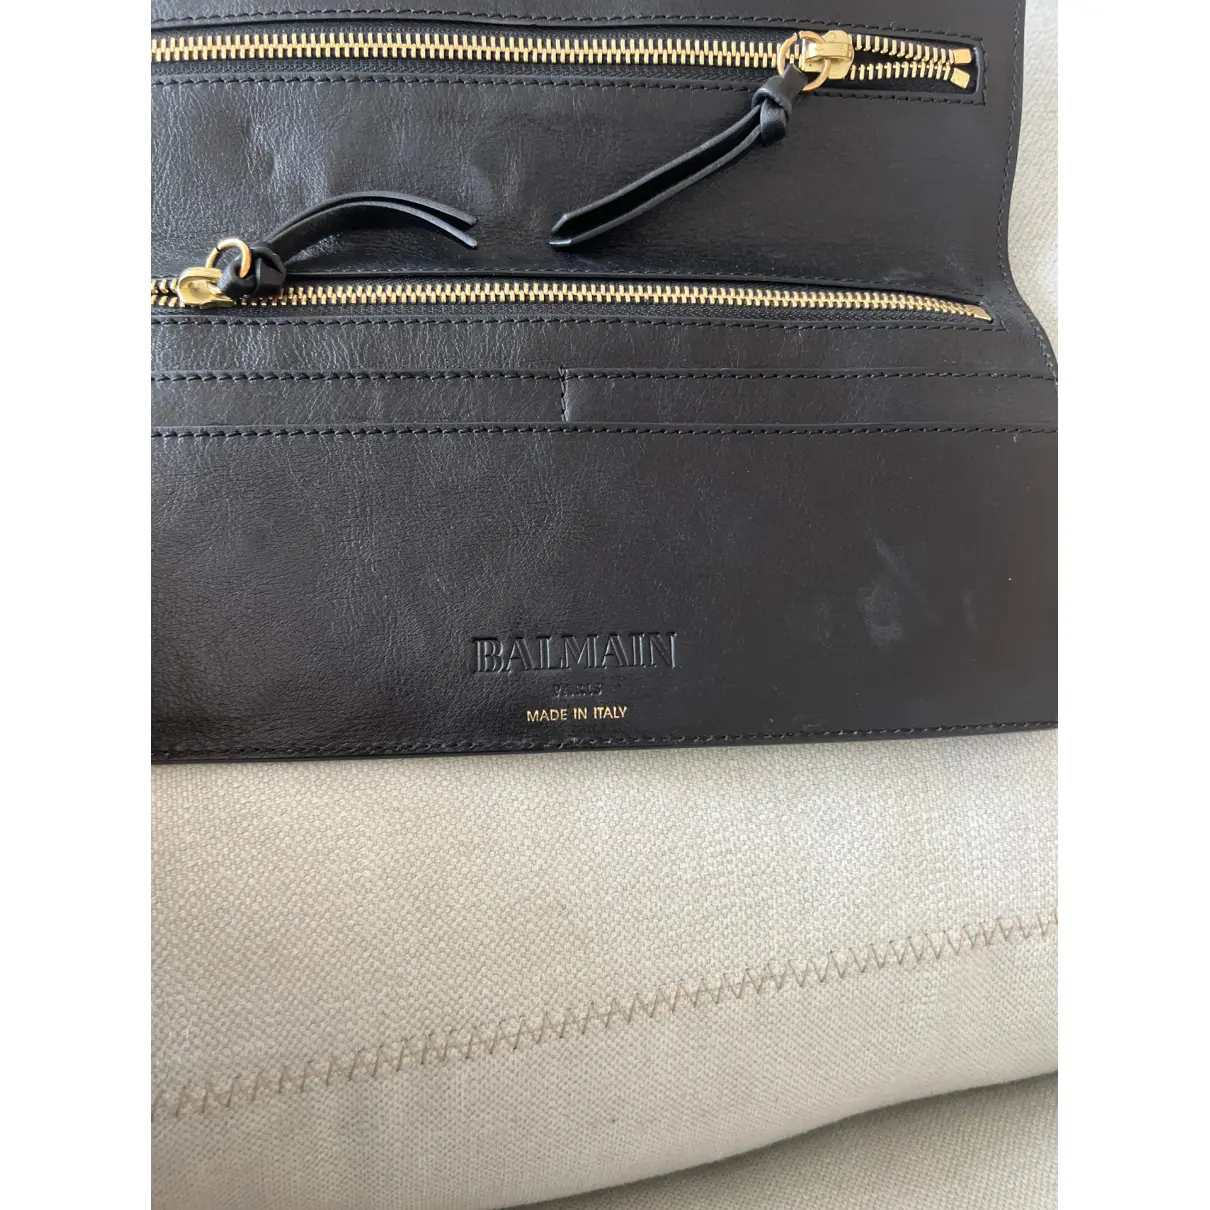 Buy Balmain Leather clutch bag online